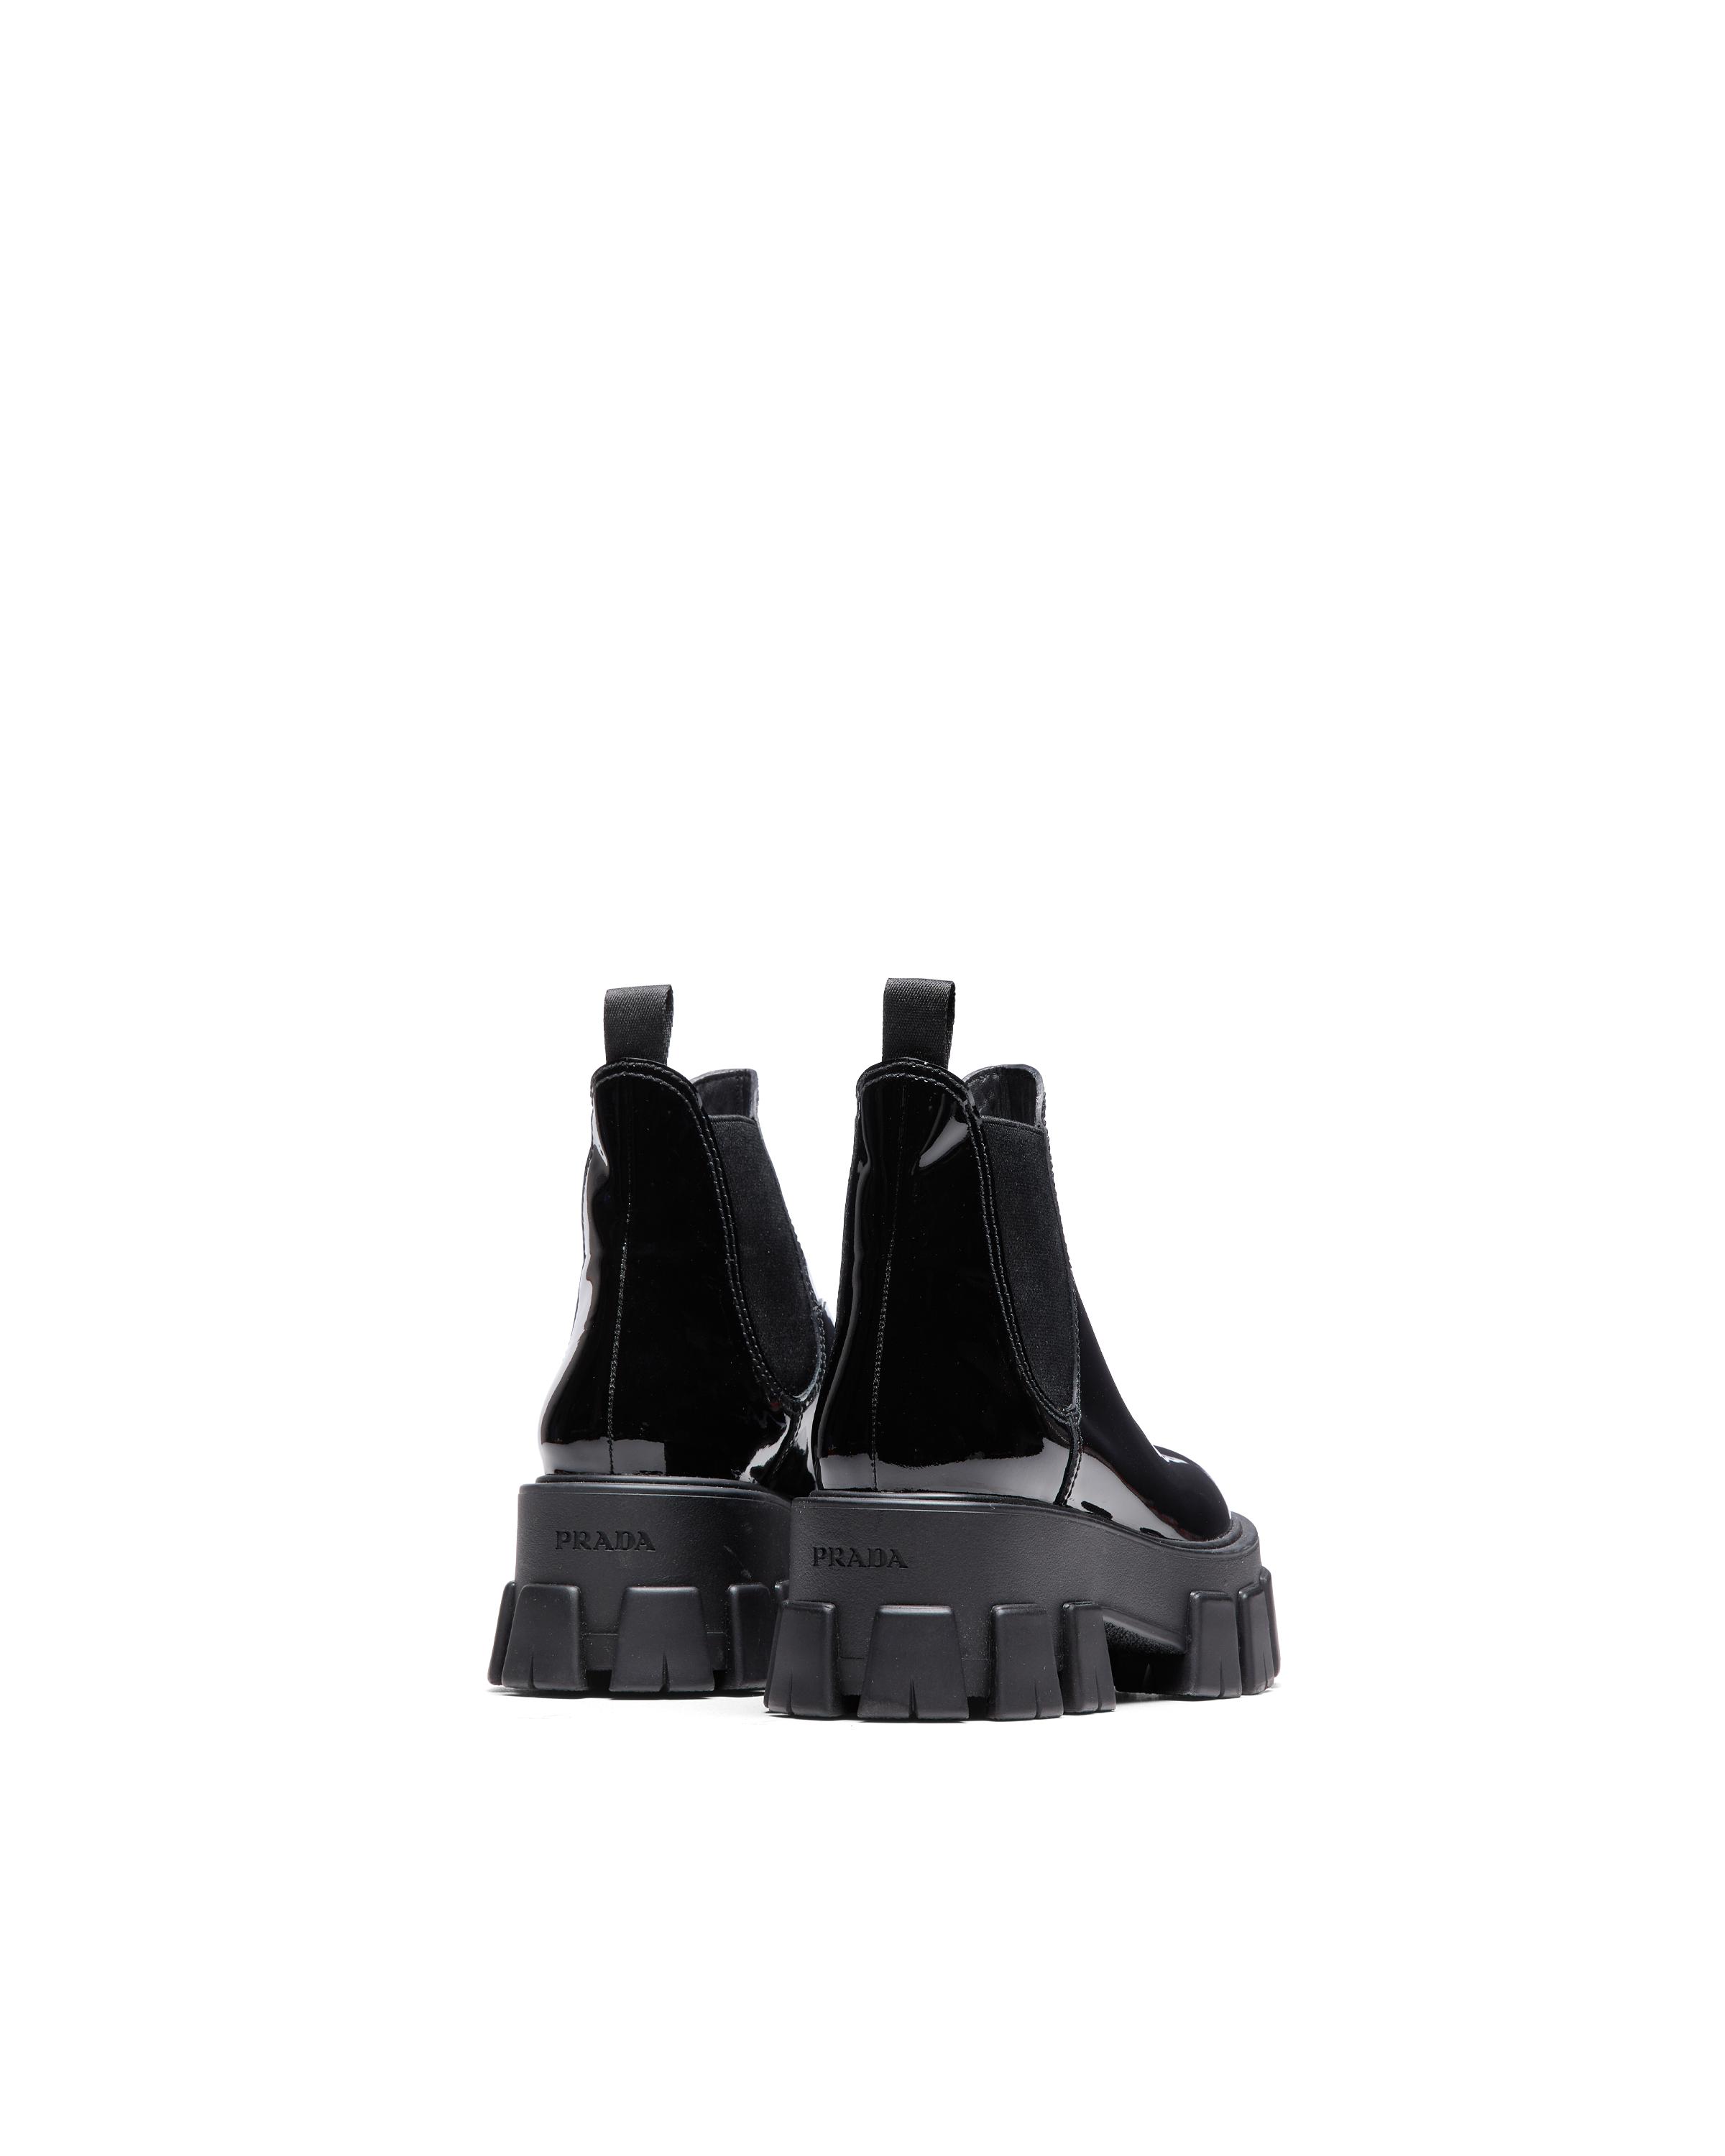 Prada Monolith Patent Leather Booties in Black | Lyst